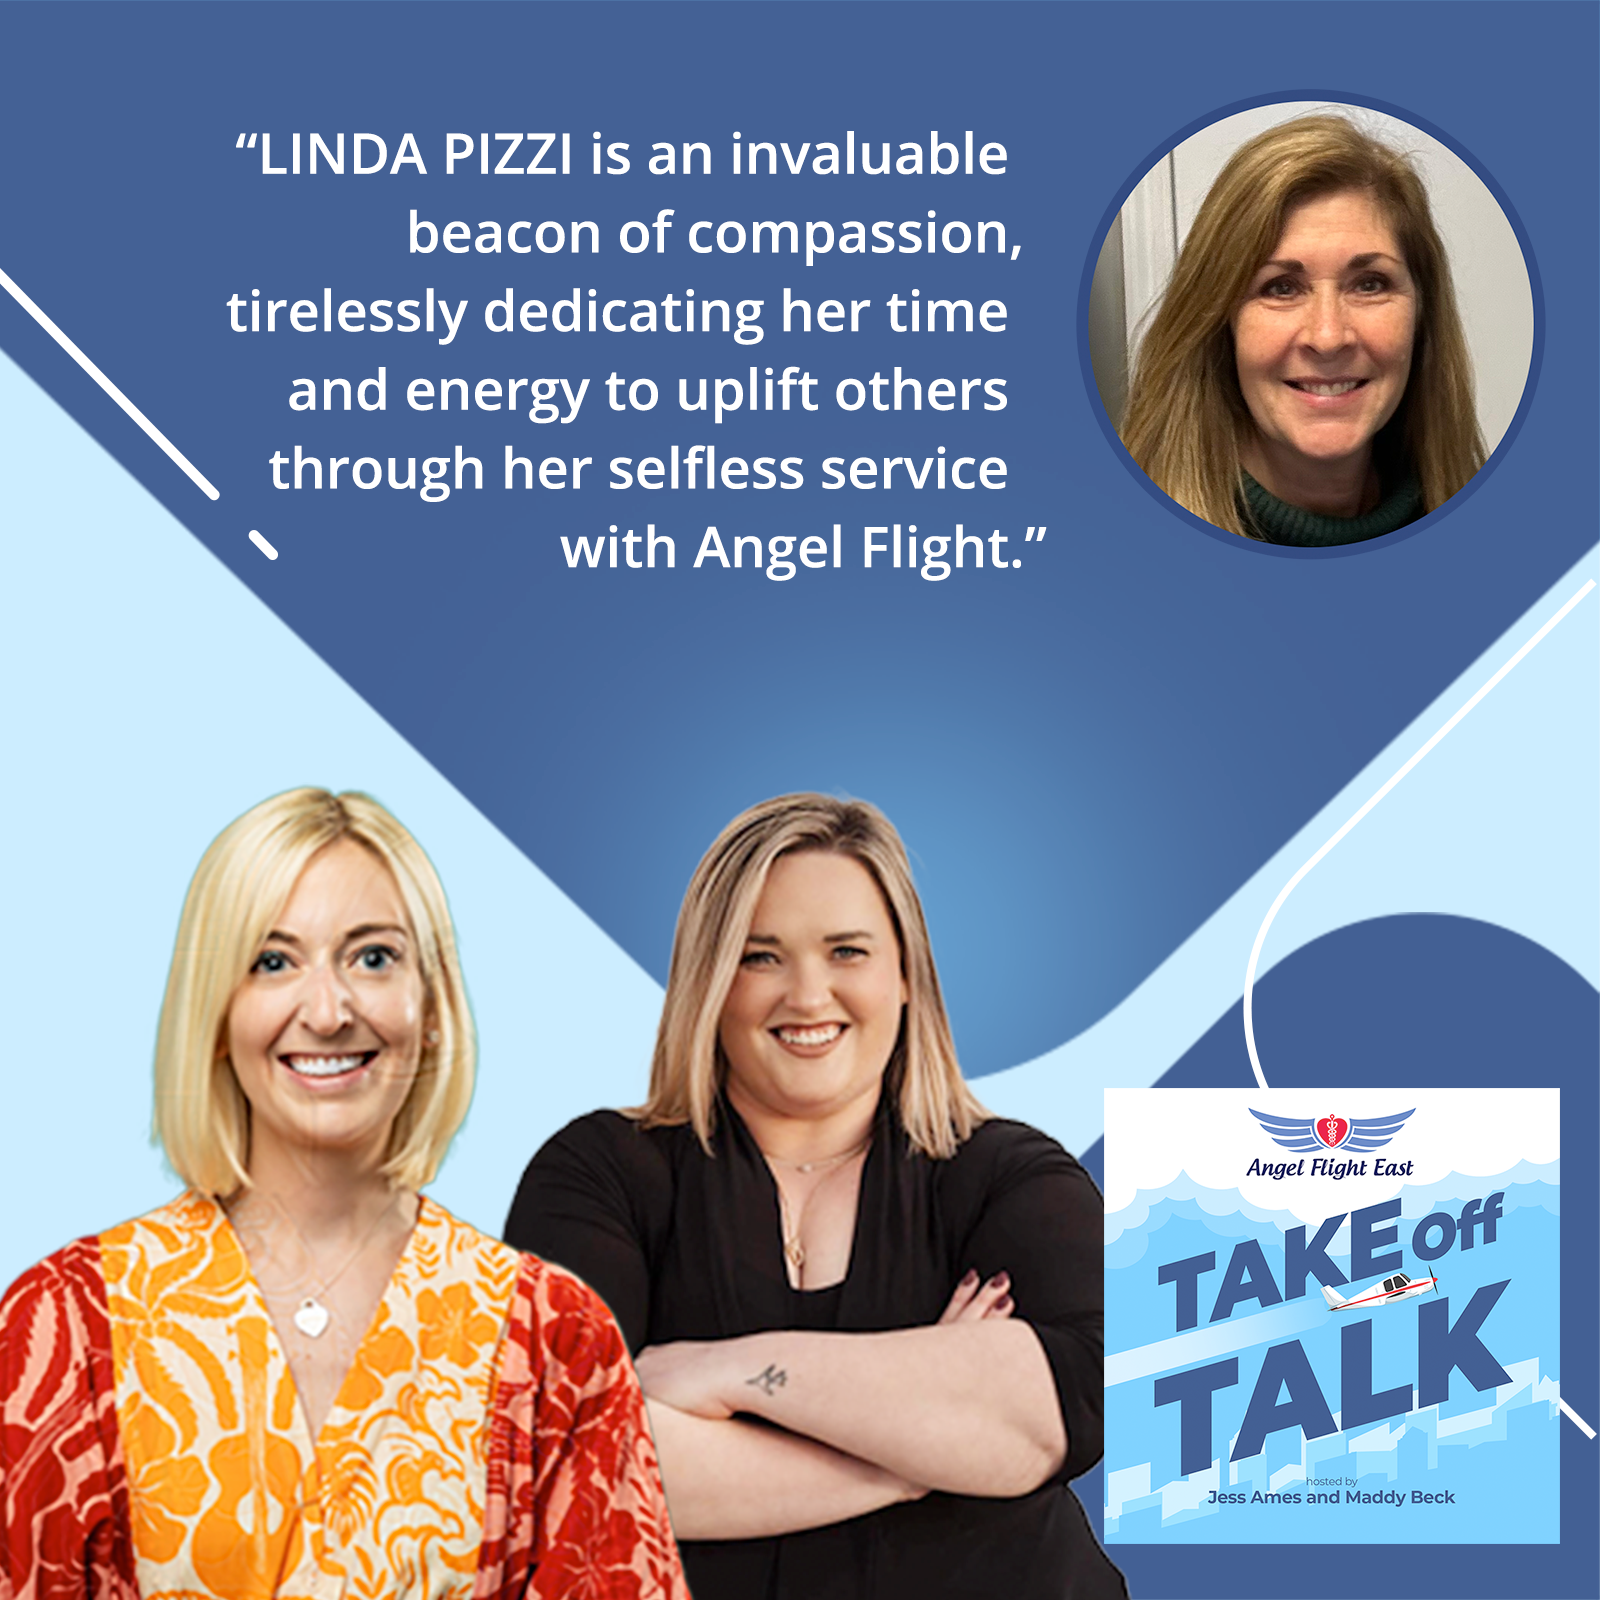 Take Off Talk with Angel Flight East | Linda Pizzi | Angel Flight Volunteer